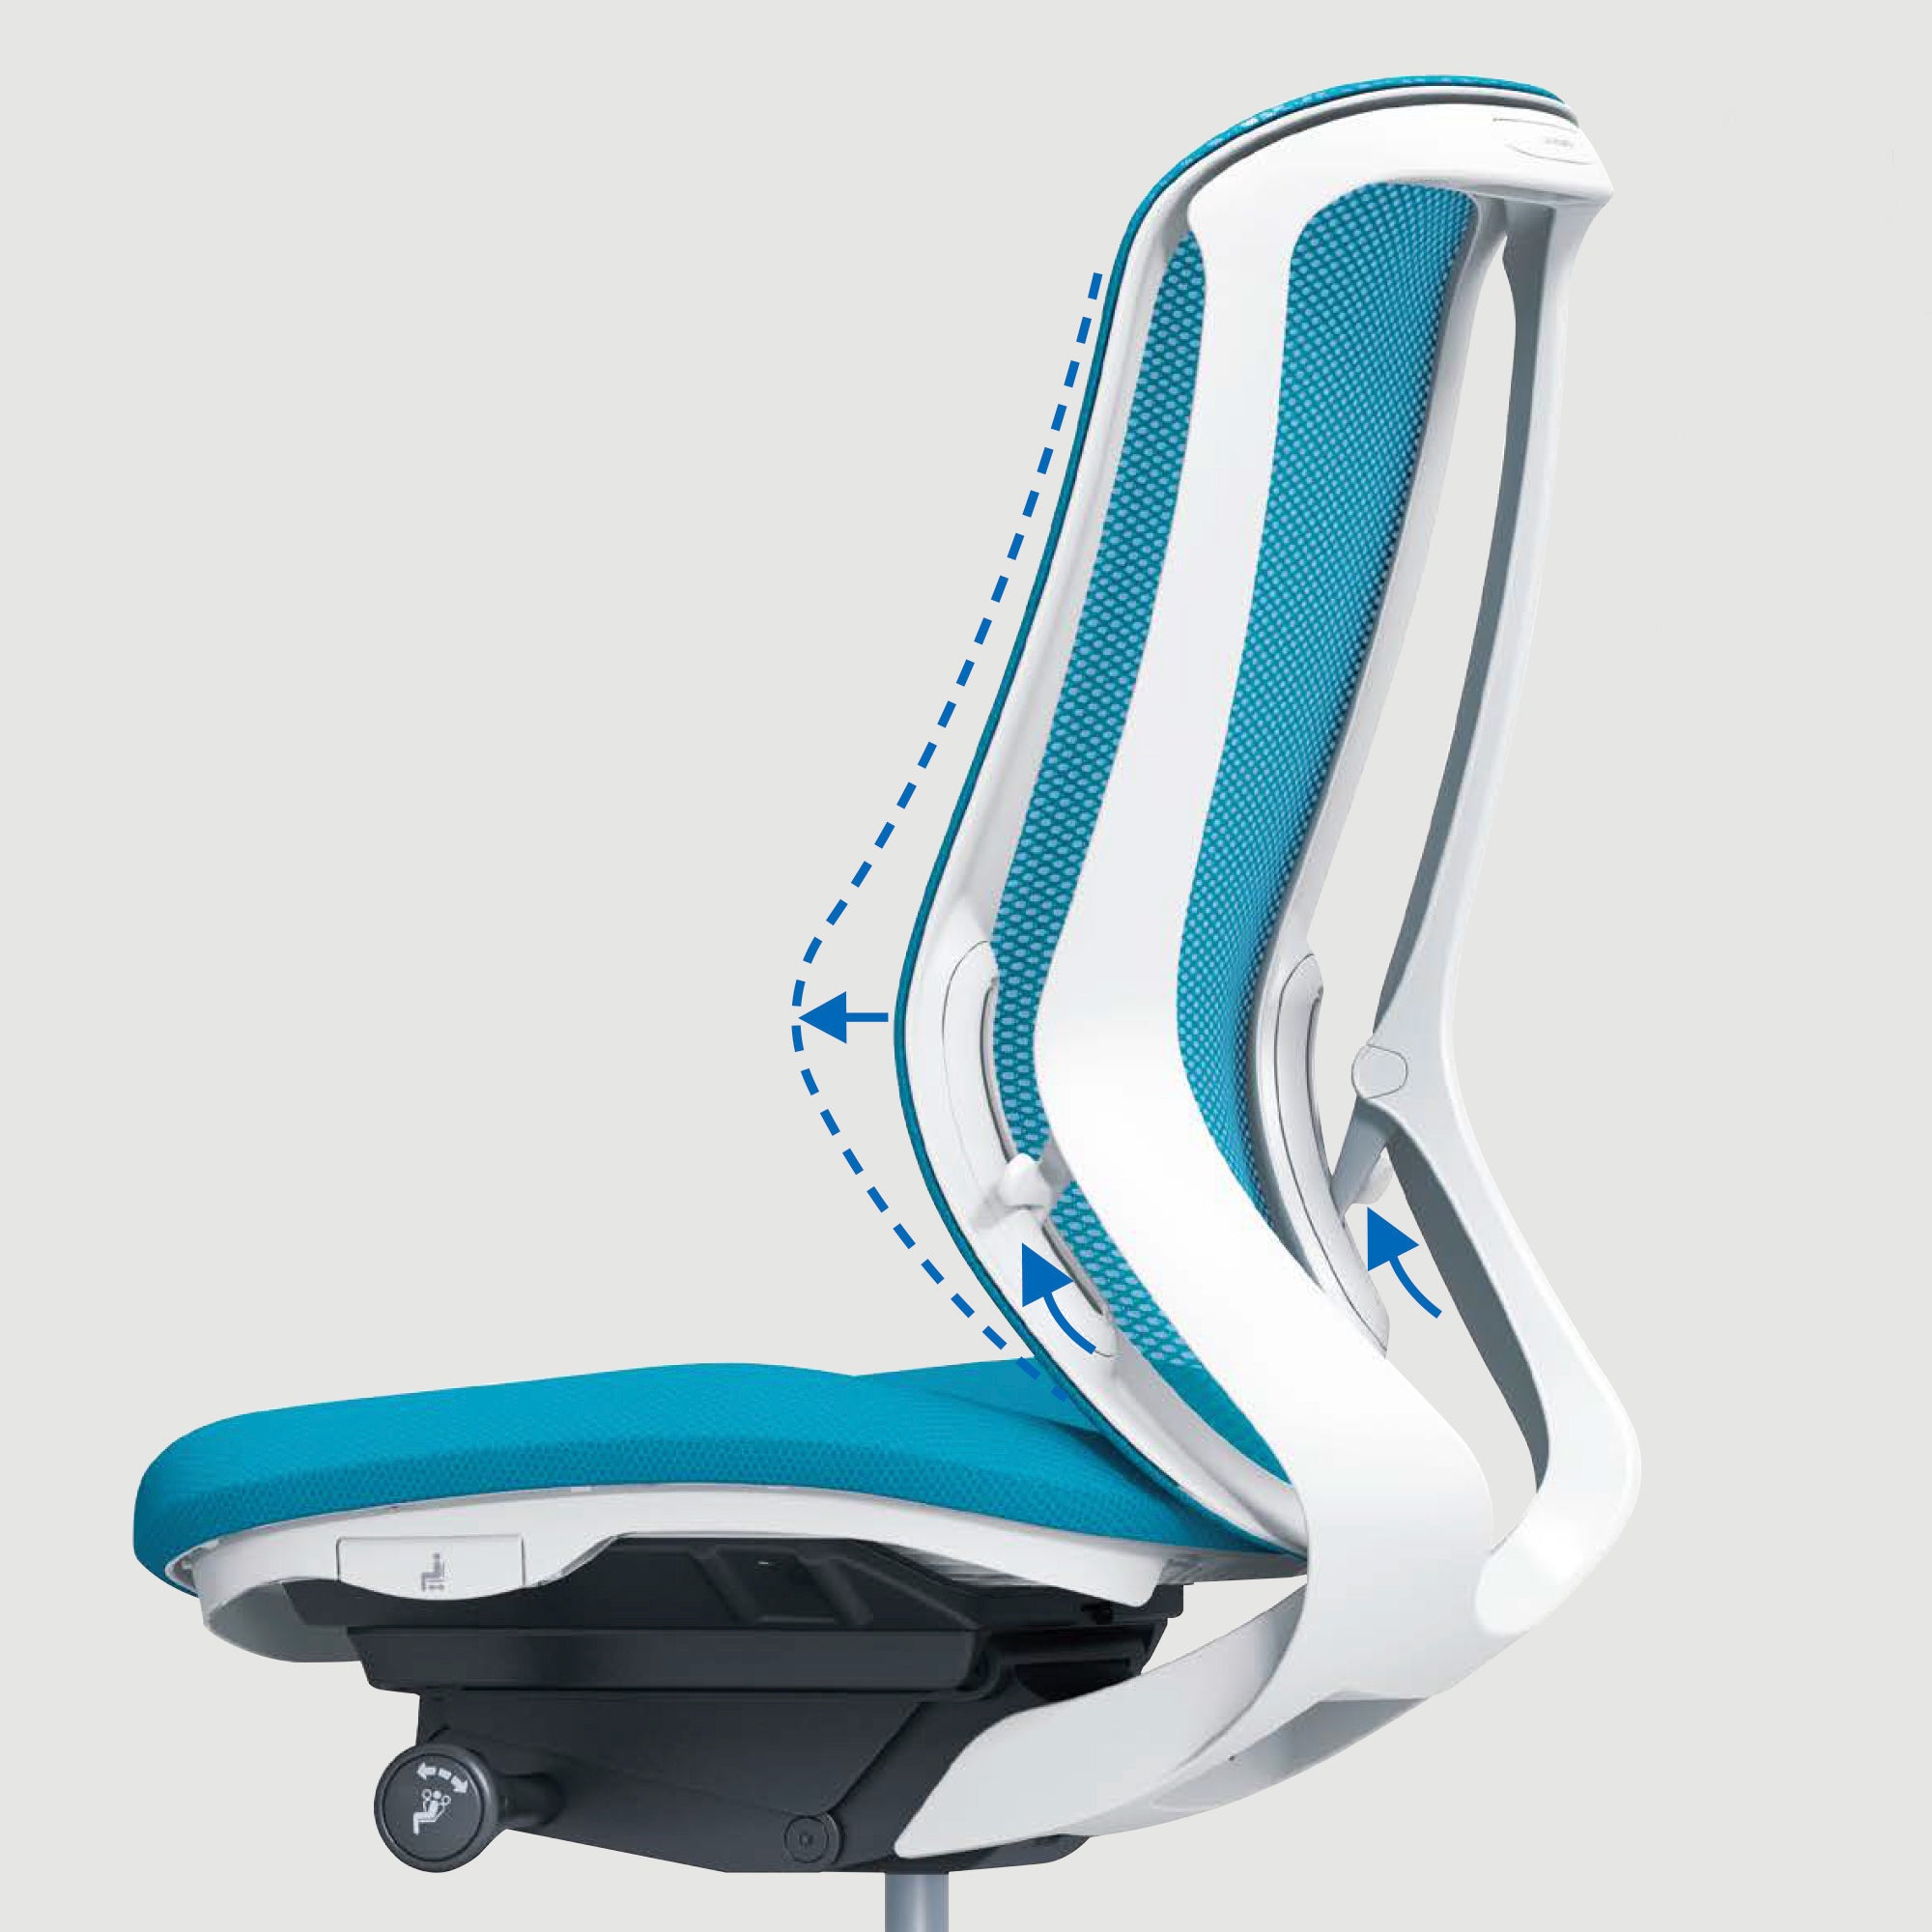 Sylphy ergonomic chair by Okamura